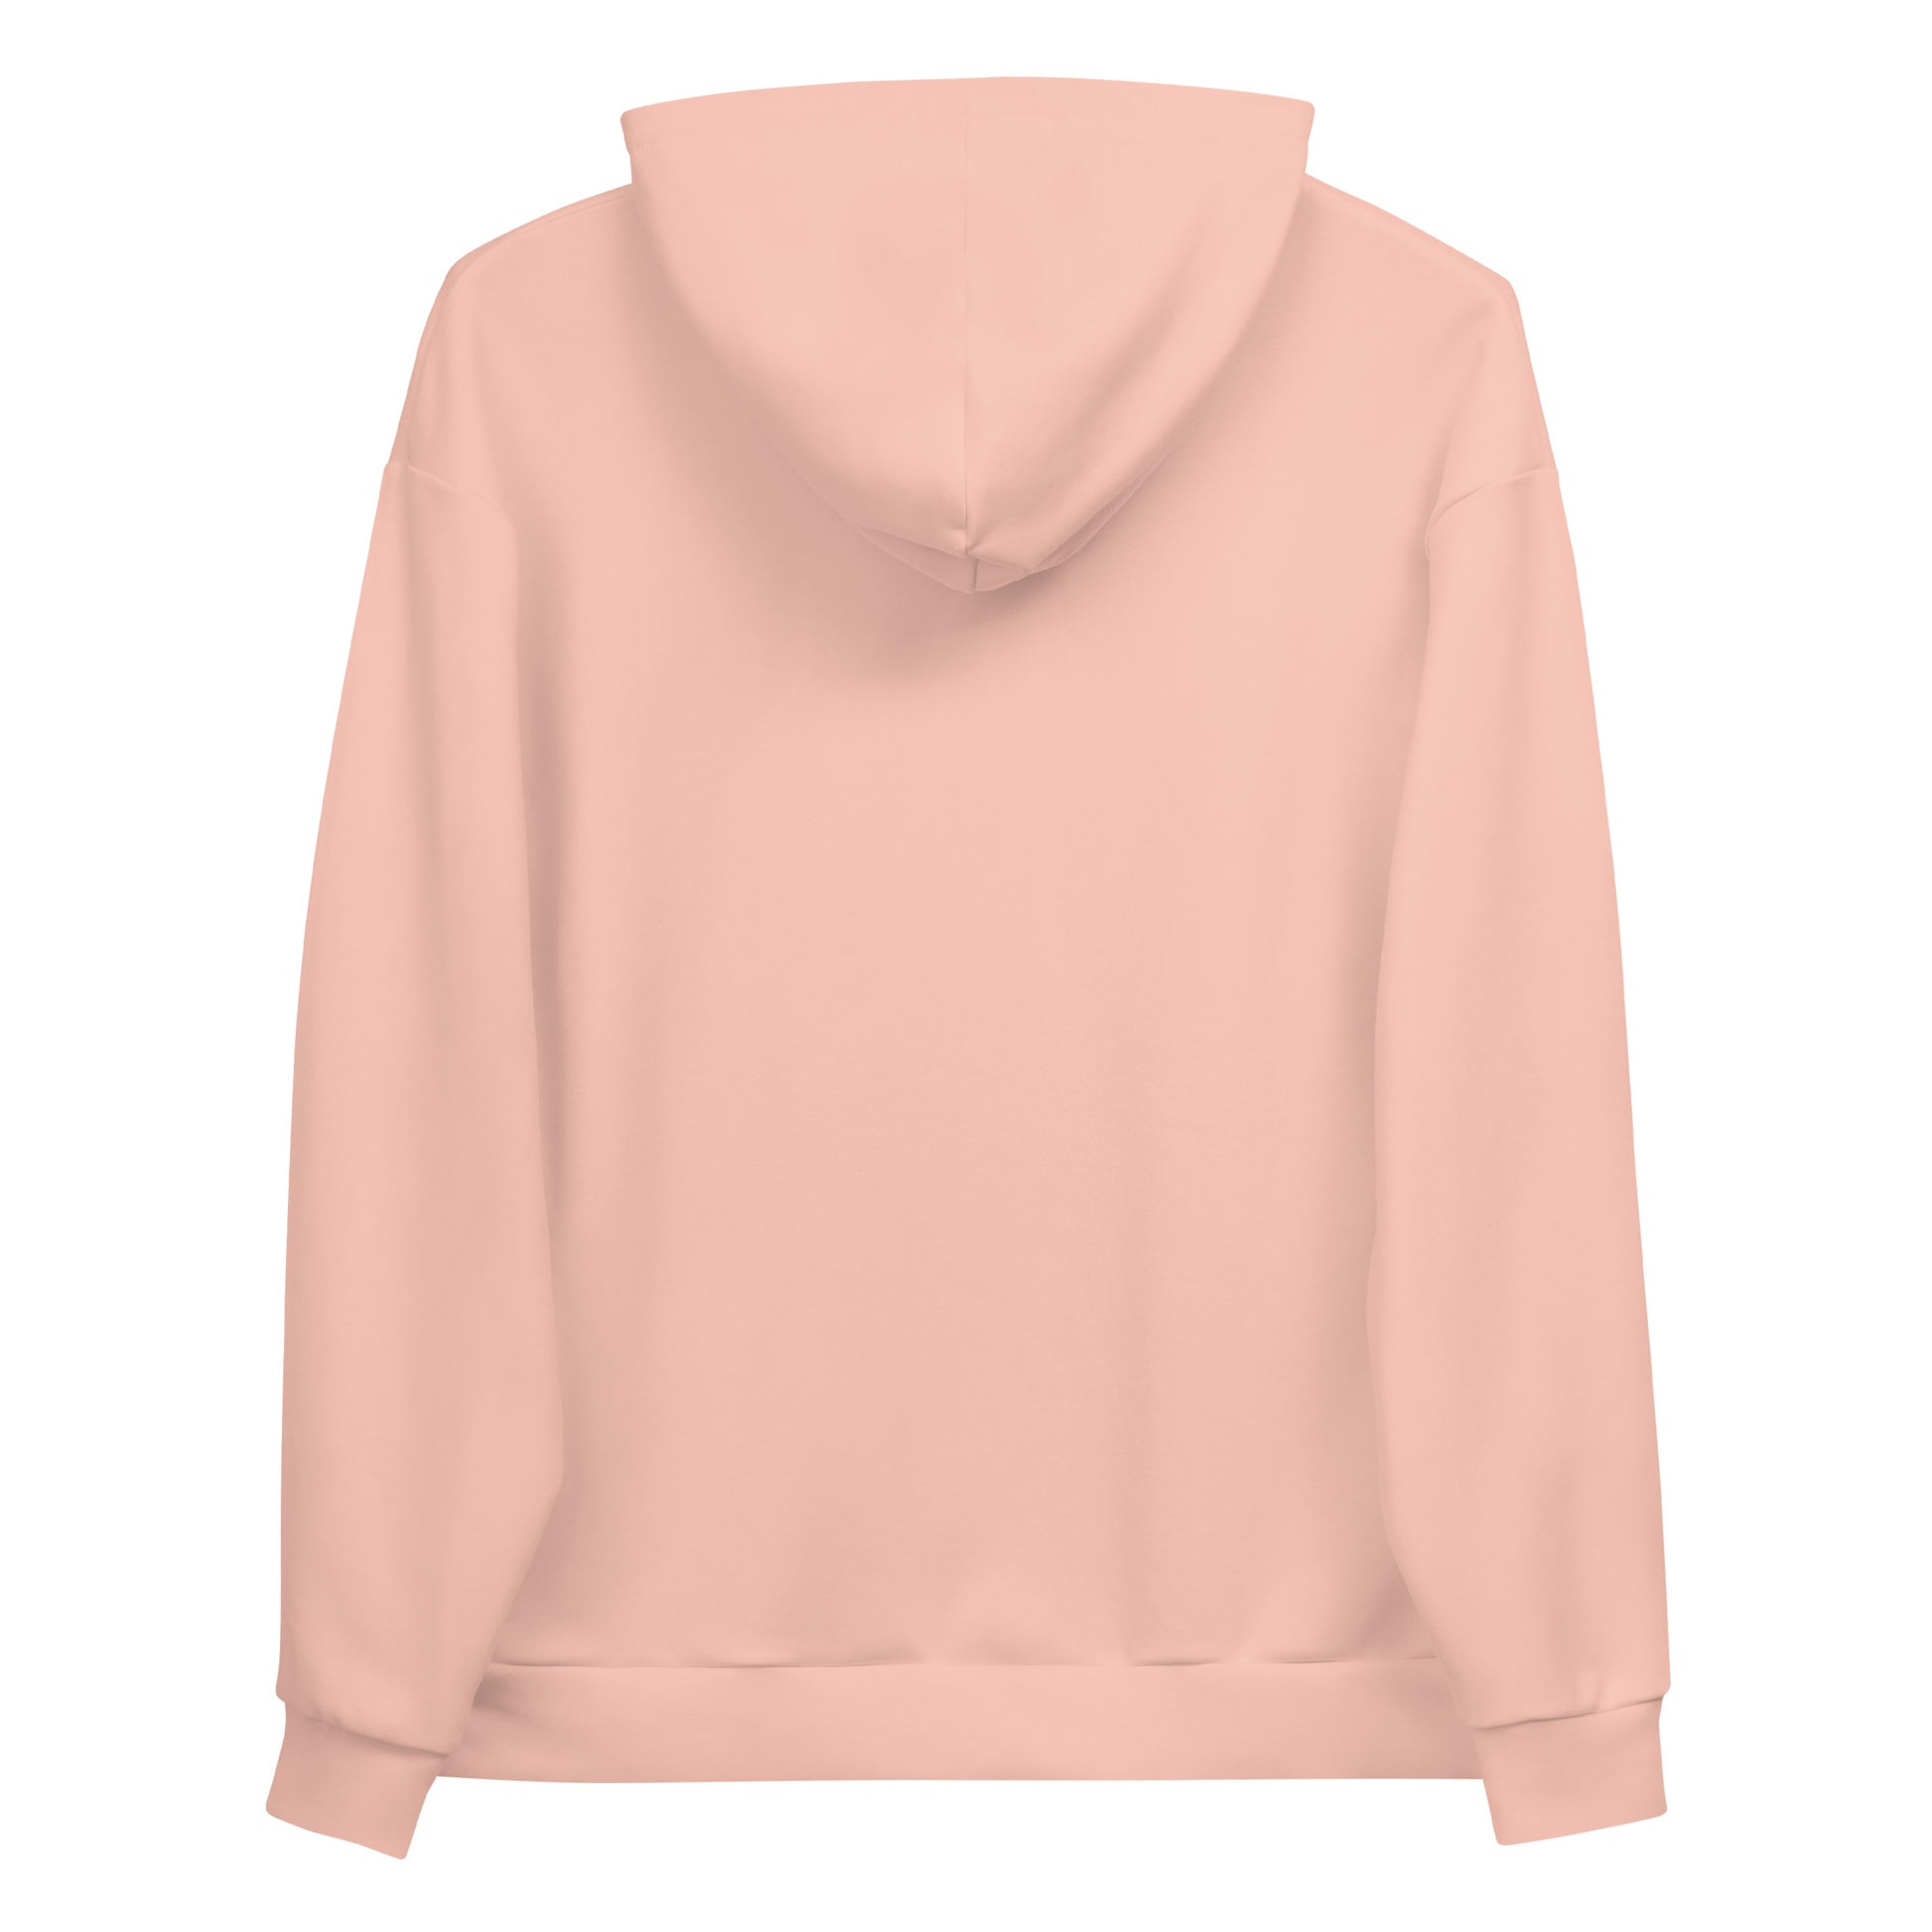 Humble Sportswear, women’s color match hoodie, fleece hoodies, women’s kangaroo pocket hoodies